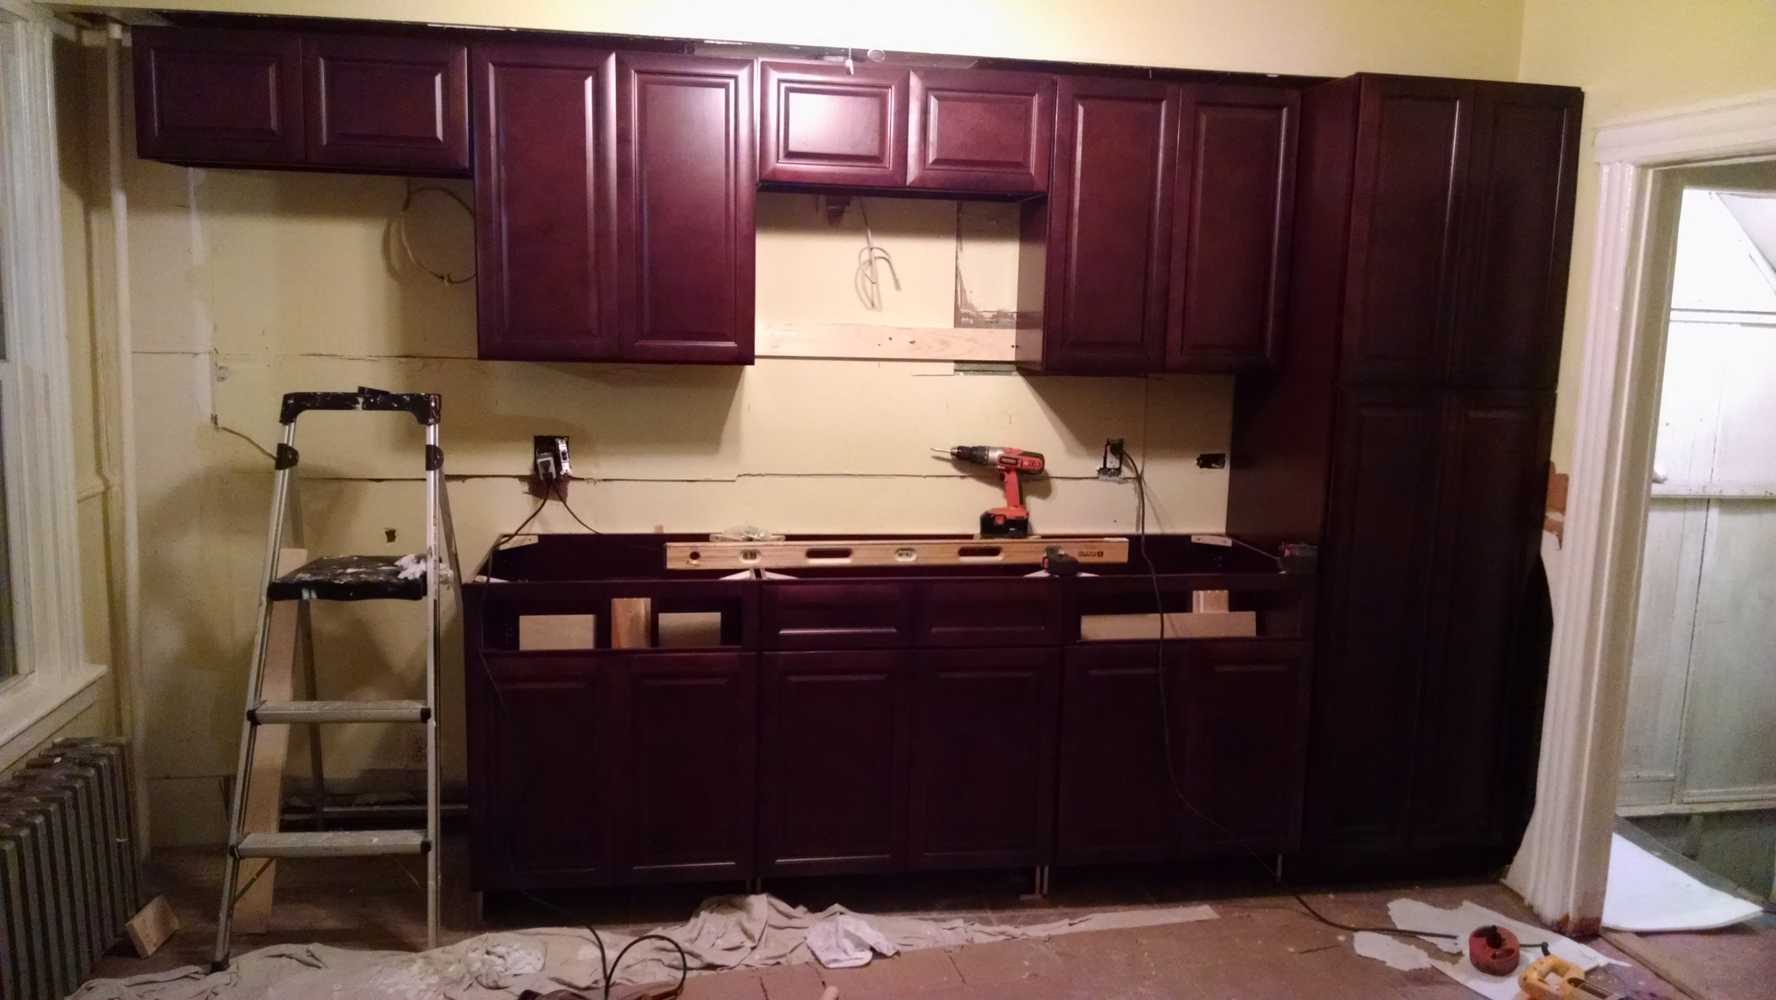 Kitchen remodeled